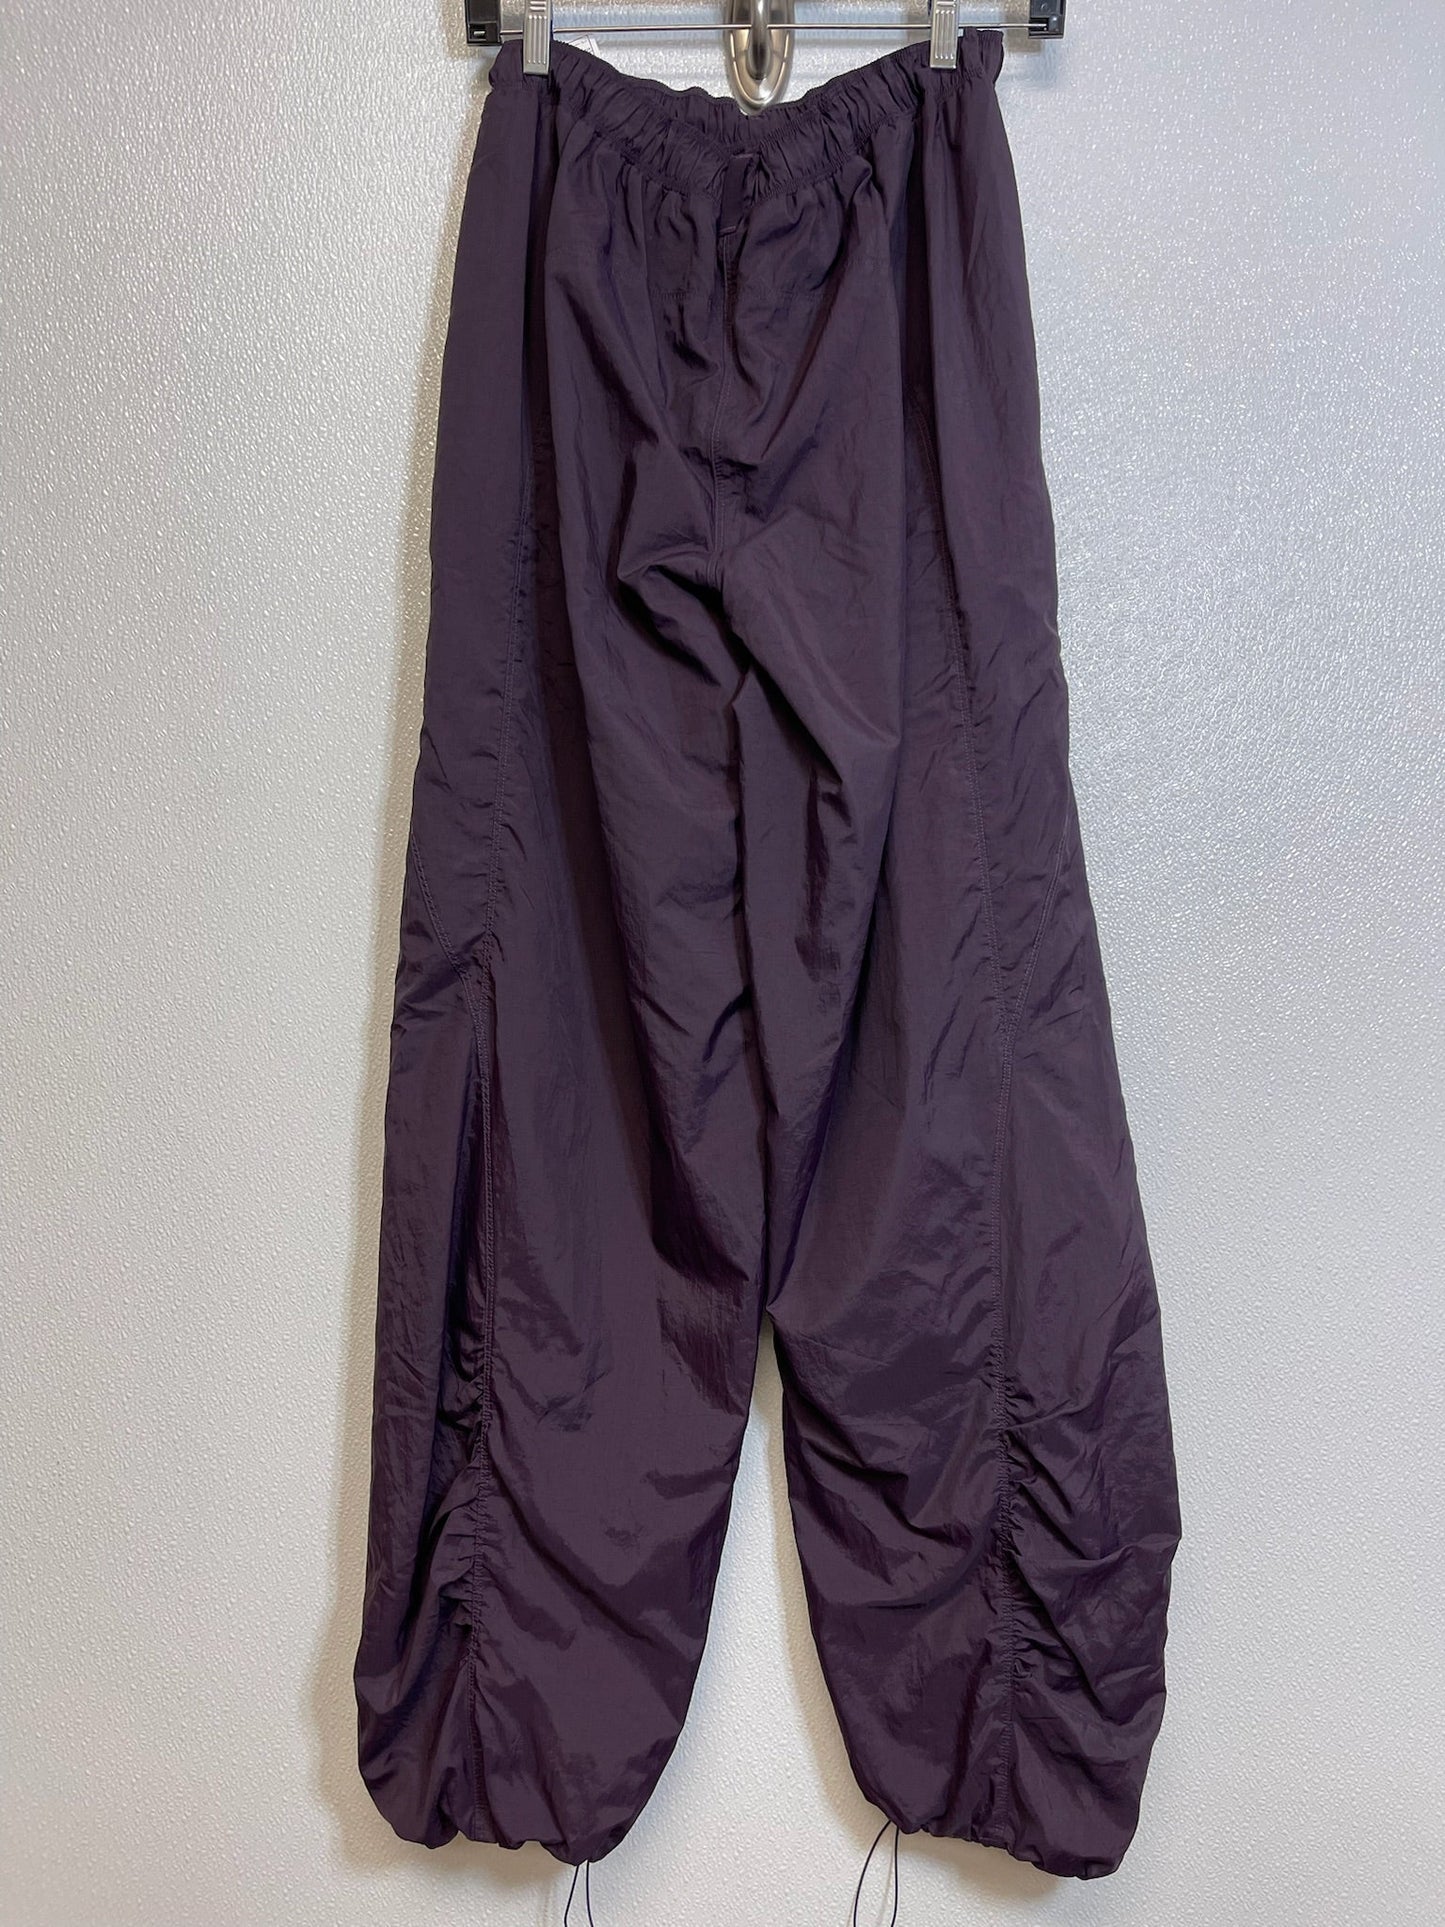 Purple Athletic Pants Athleta, Size M